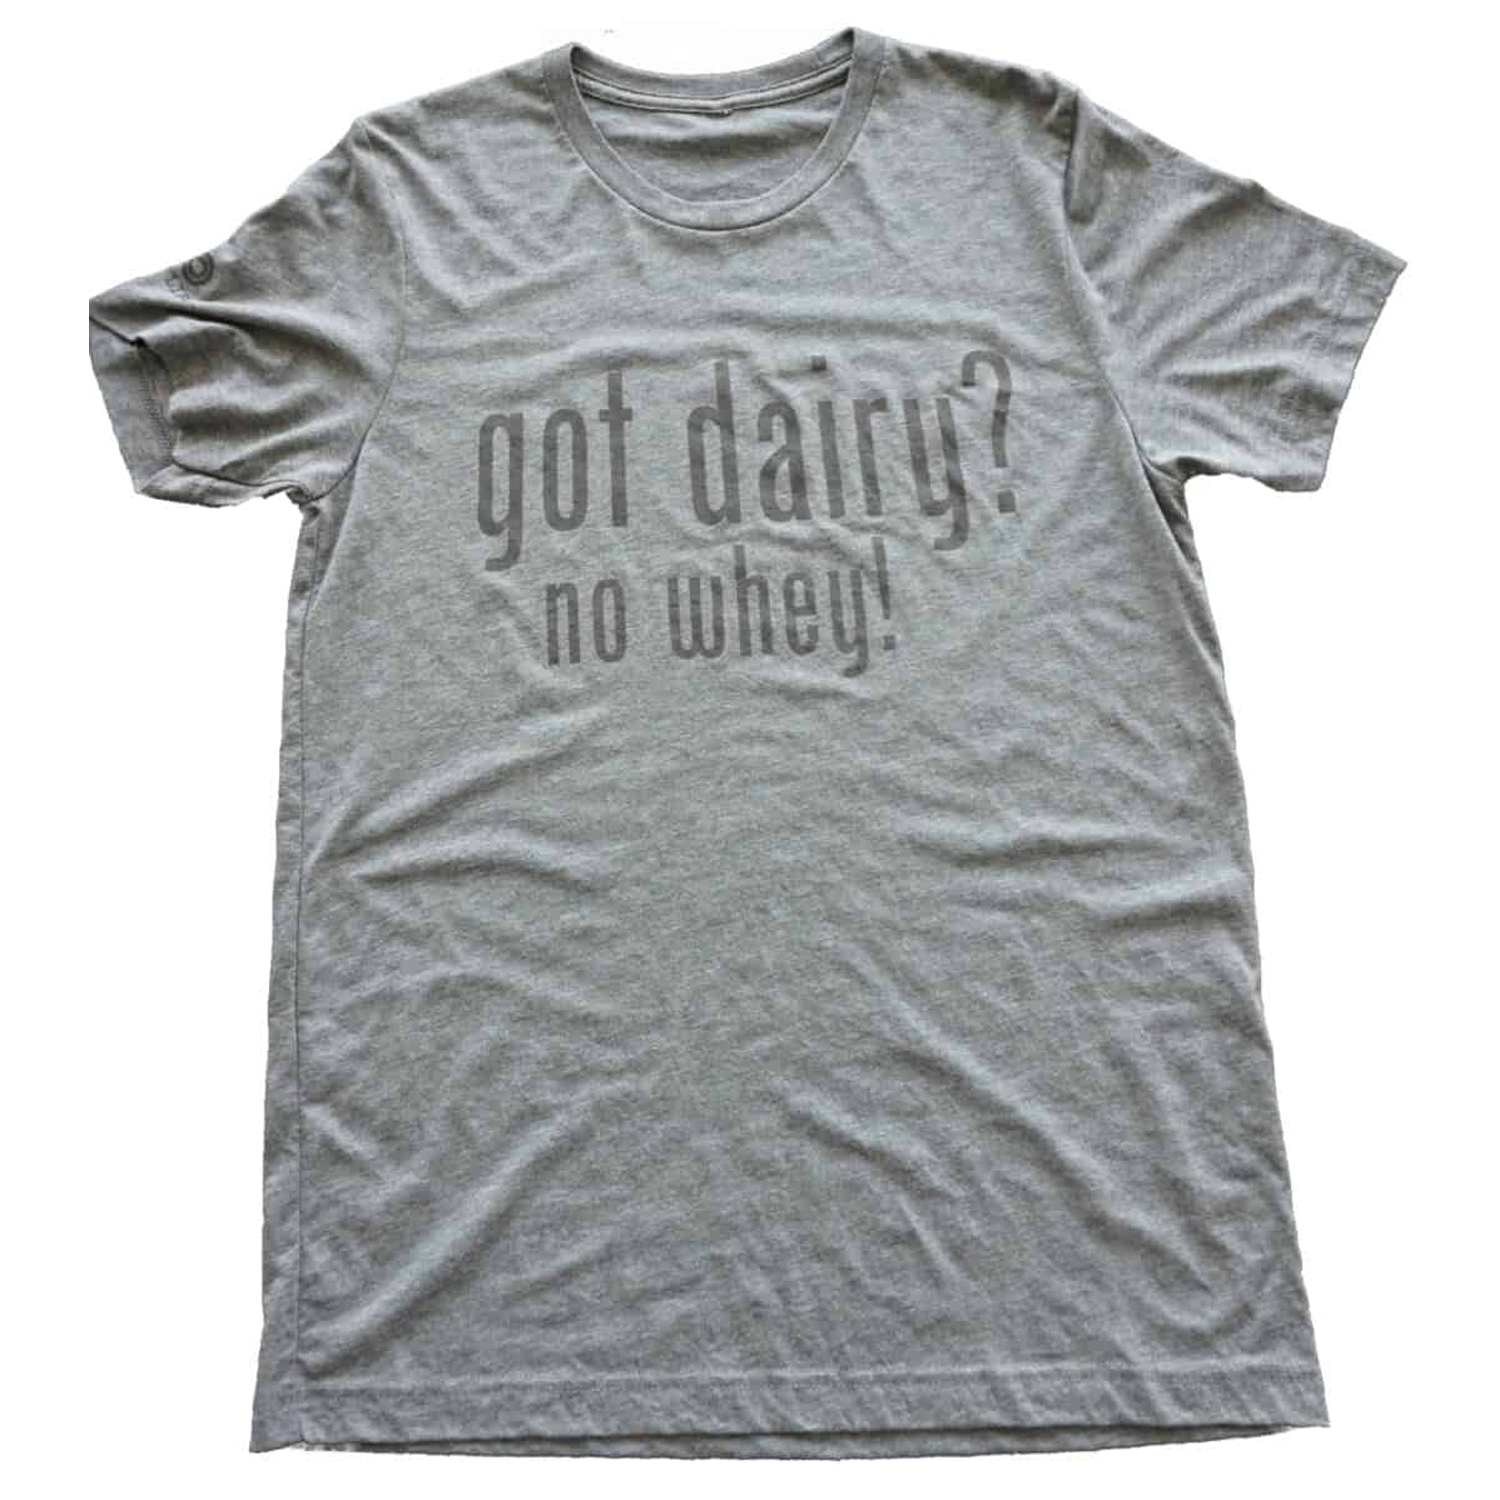 Got Dairy? No Whey! T Shirt